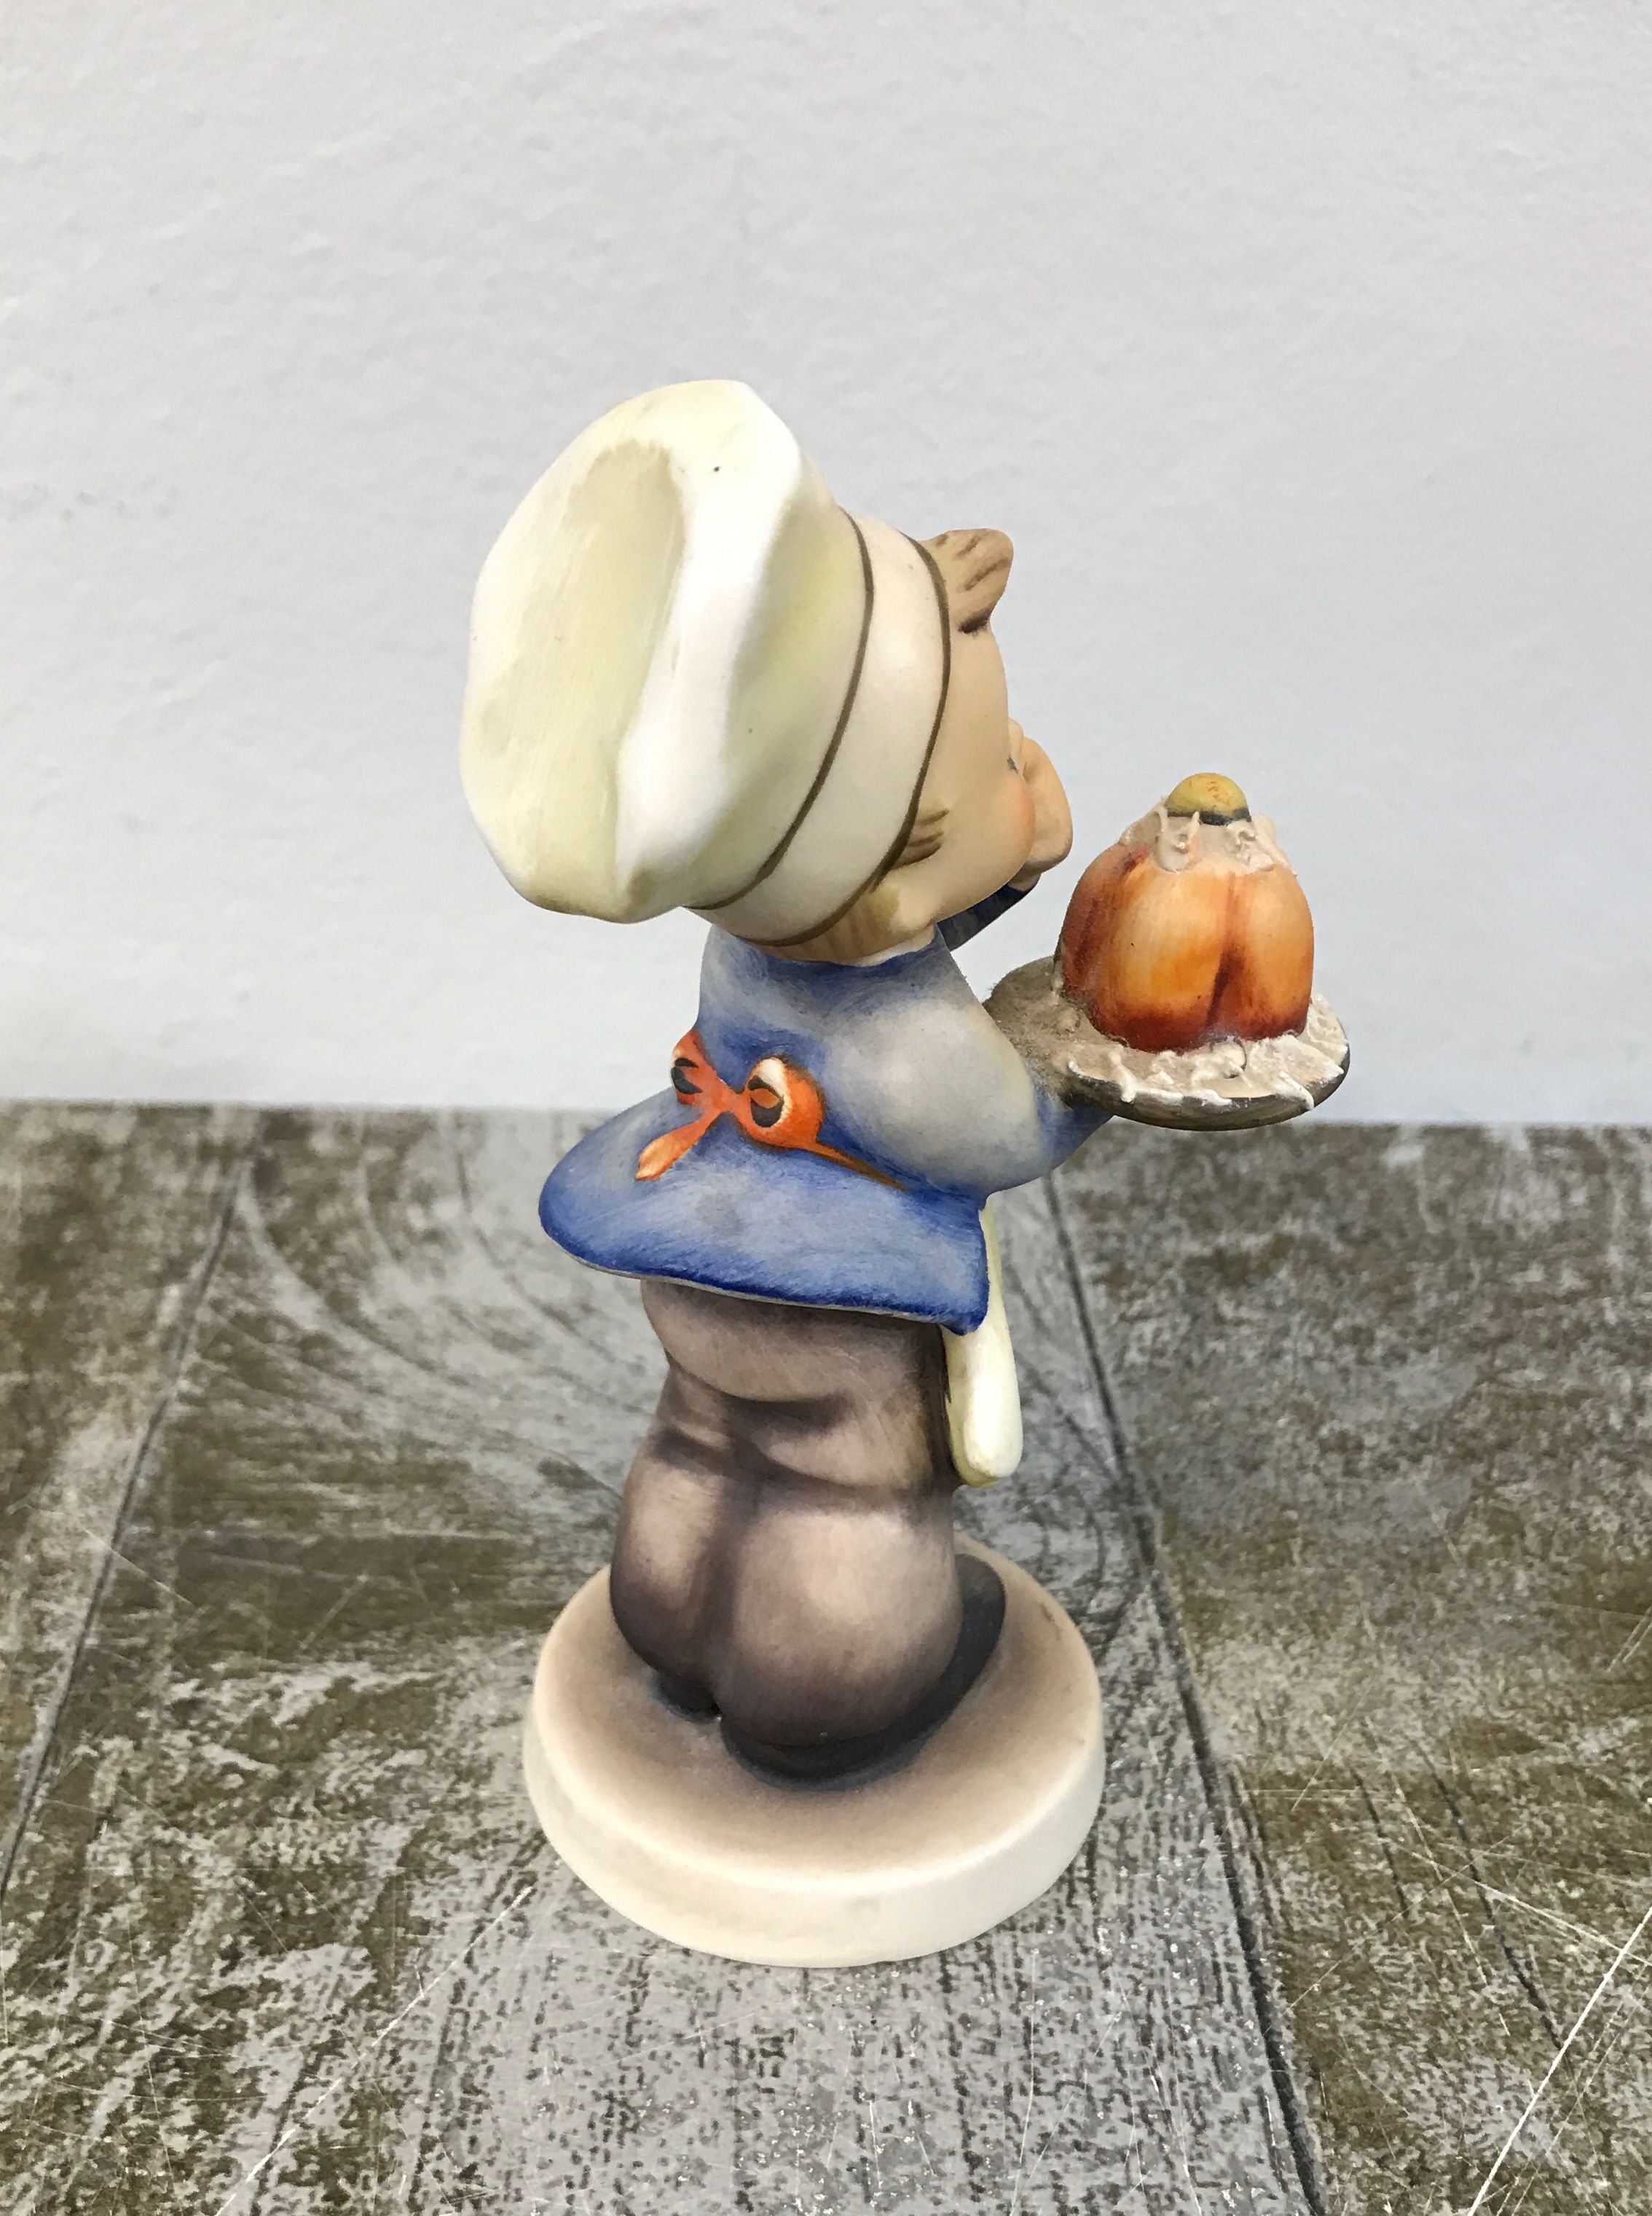 Hummel West Germany #128 "Little Baker" Figurine